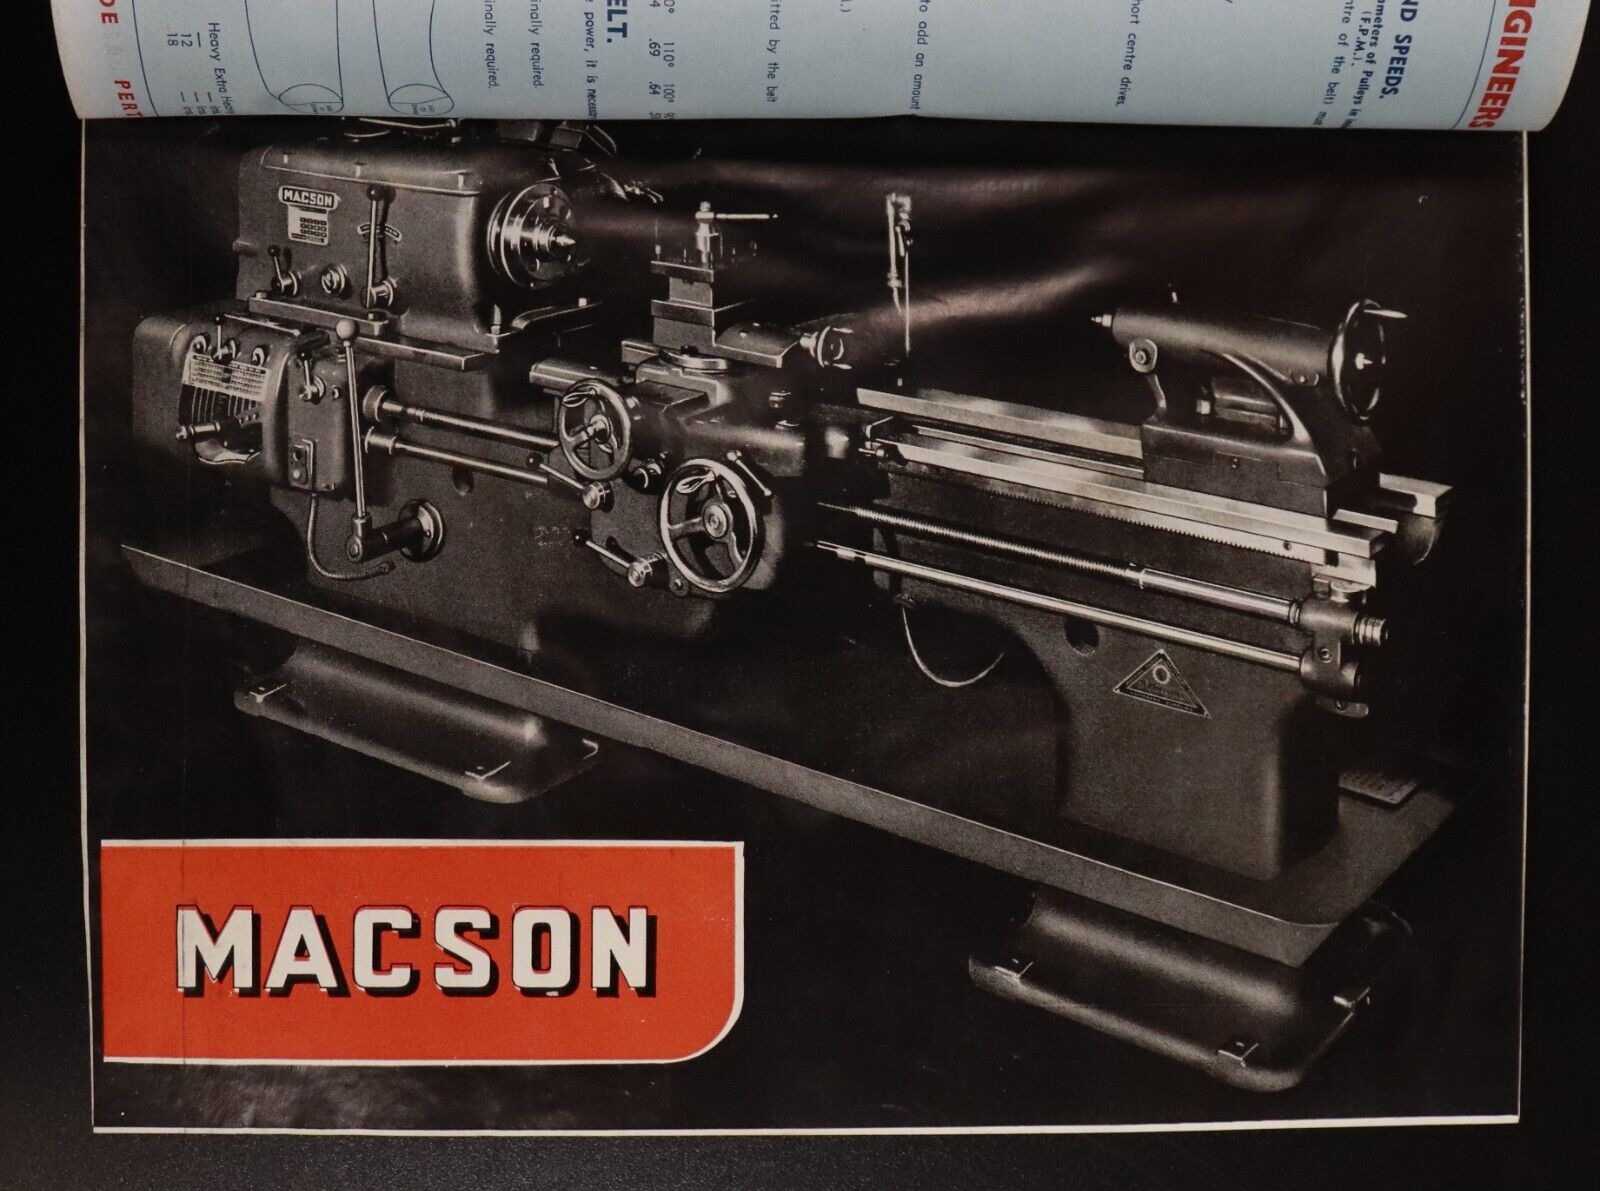 1955 McPherson's Ltd Engineers Supplies Catalogue Vintage Book Melbourne